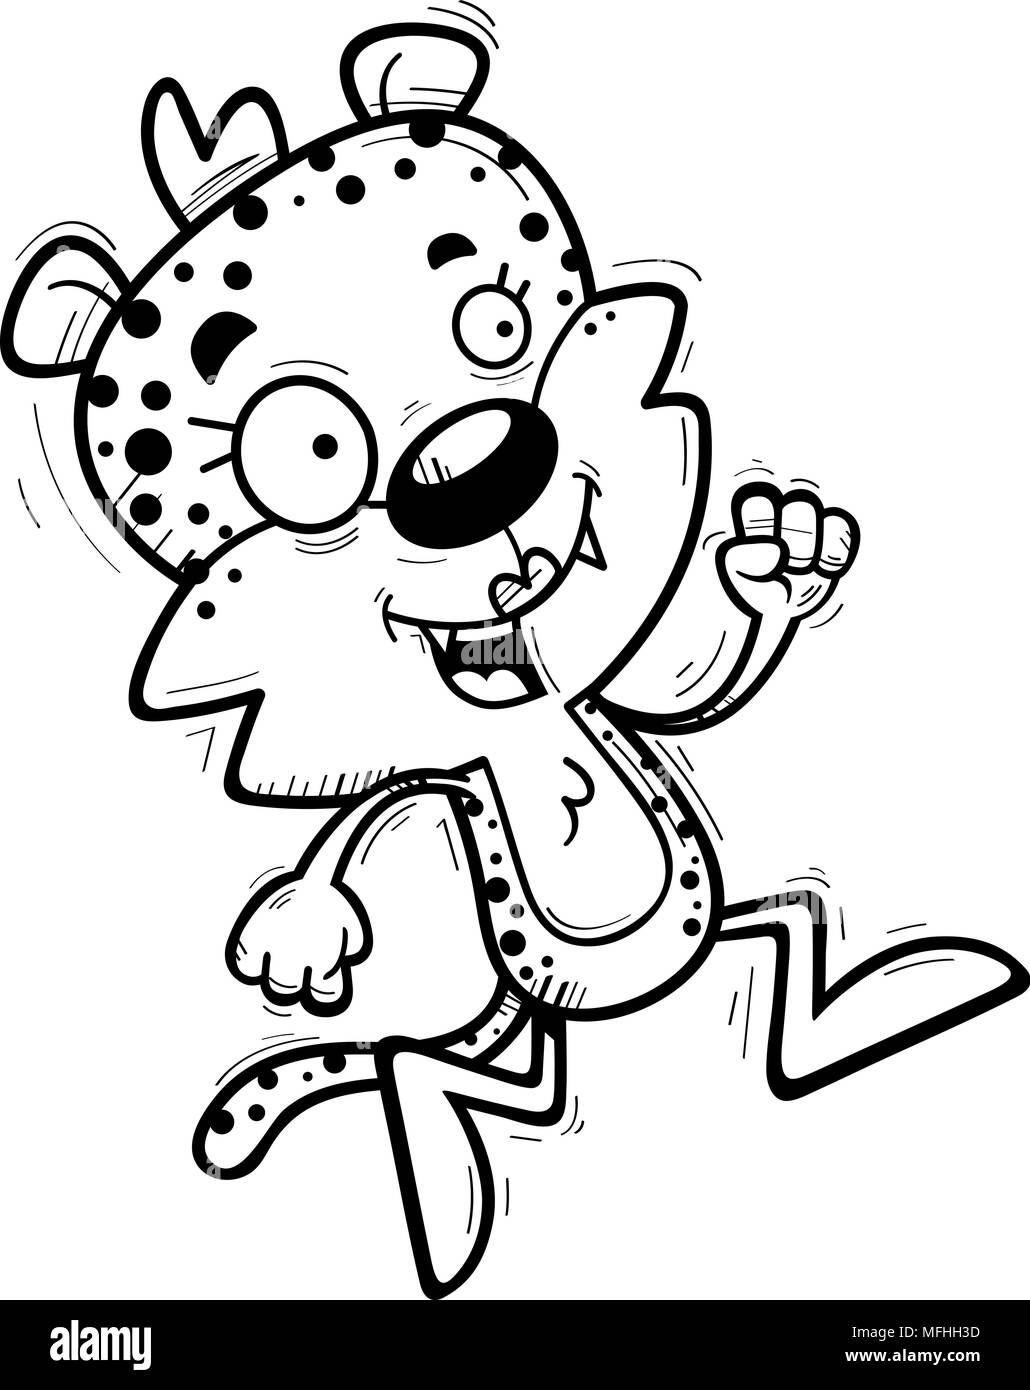 A cartoon illustration of a female leopard running. Stock Vector